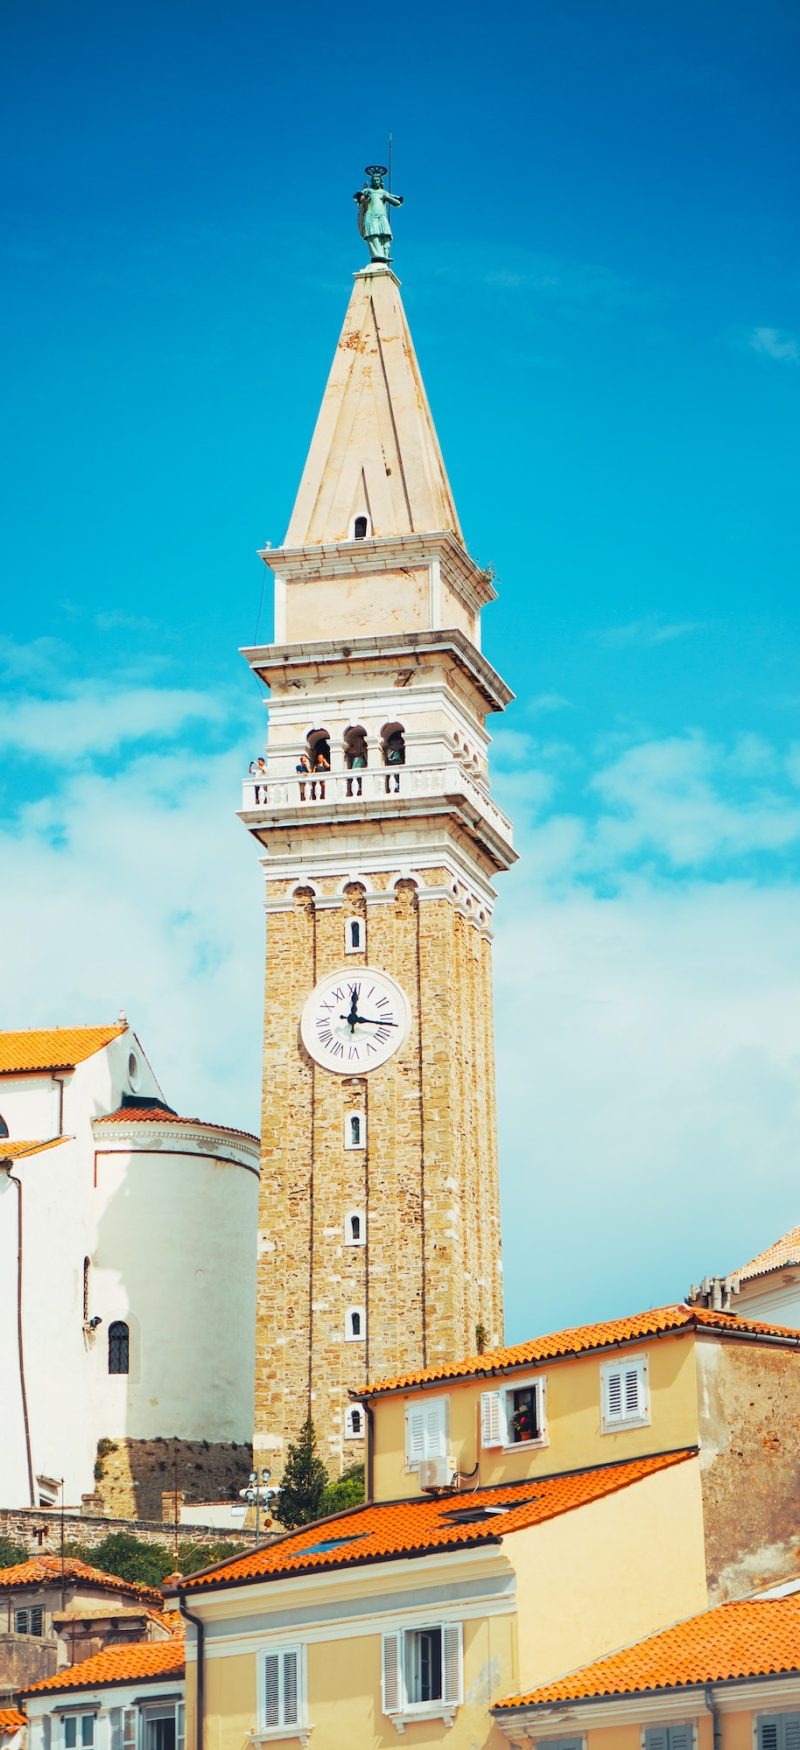 Bell clock tower in Piran, Slovenia